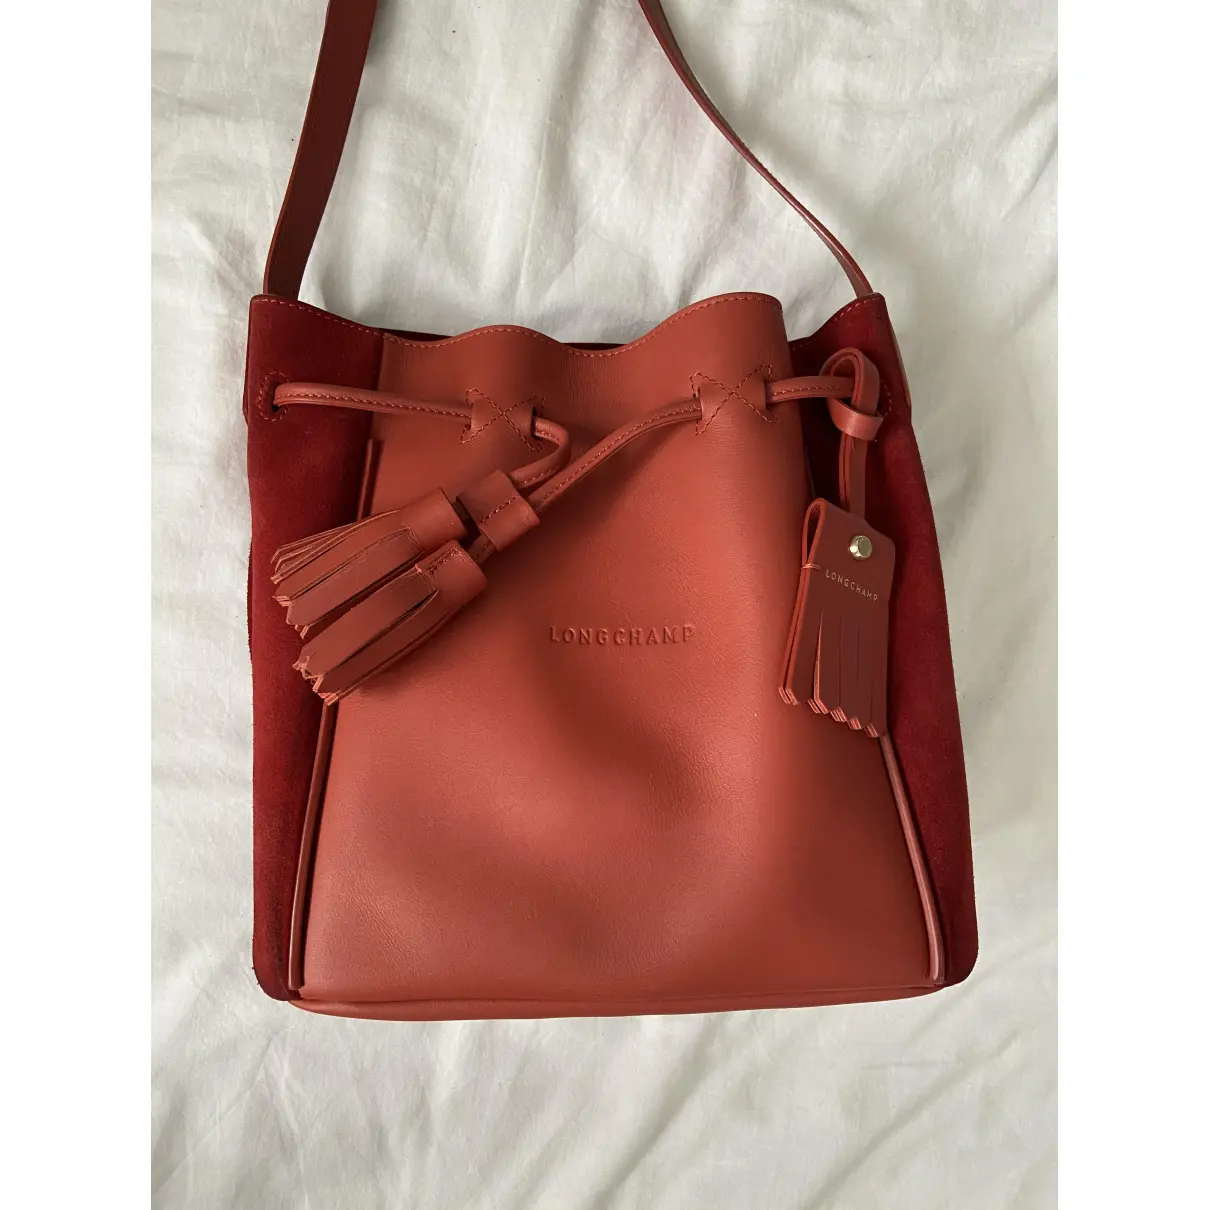 Buy Longchamp Penelope  leather crossbody bag online